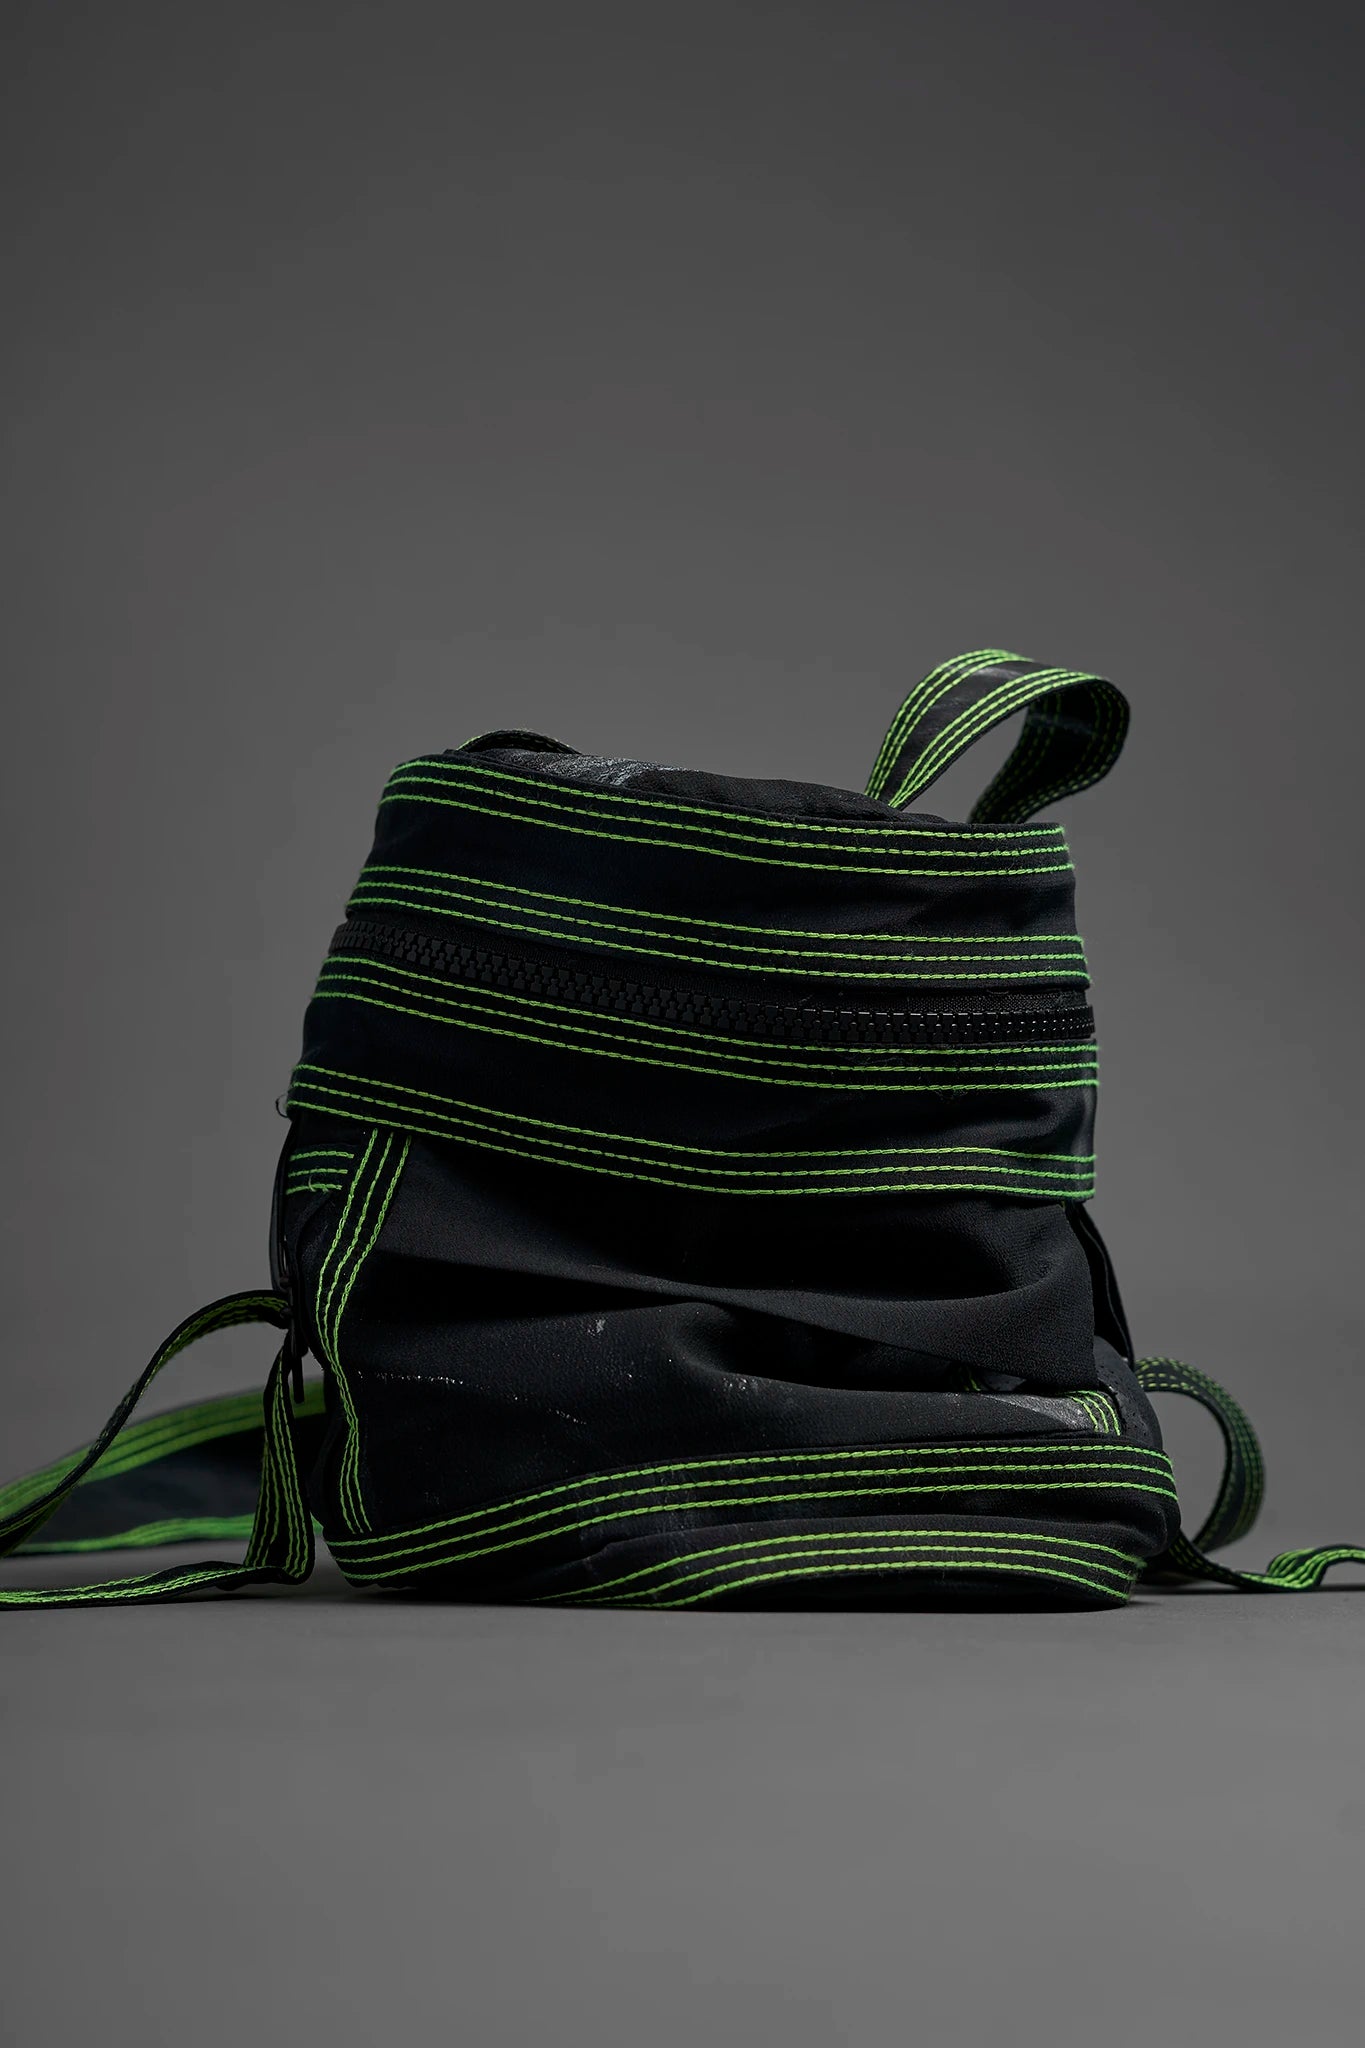 Collab Silk Barrel Bag - Black&Neon Green